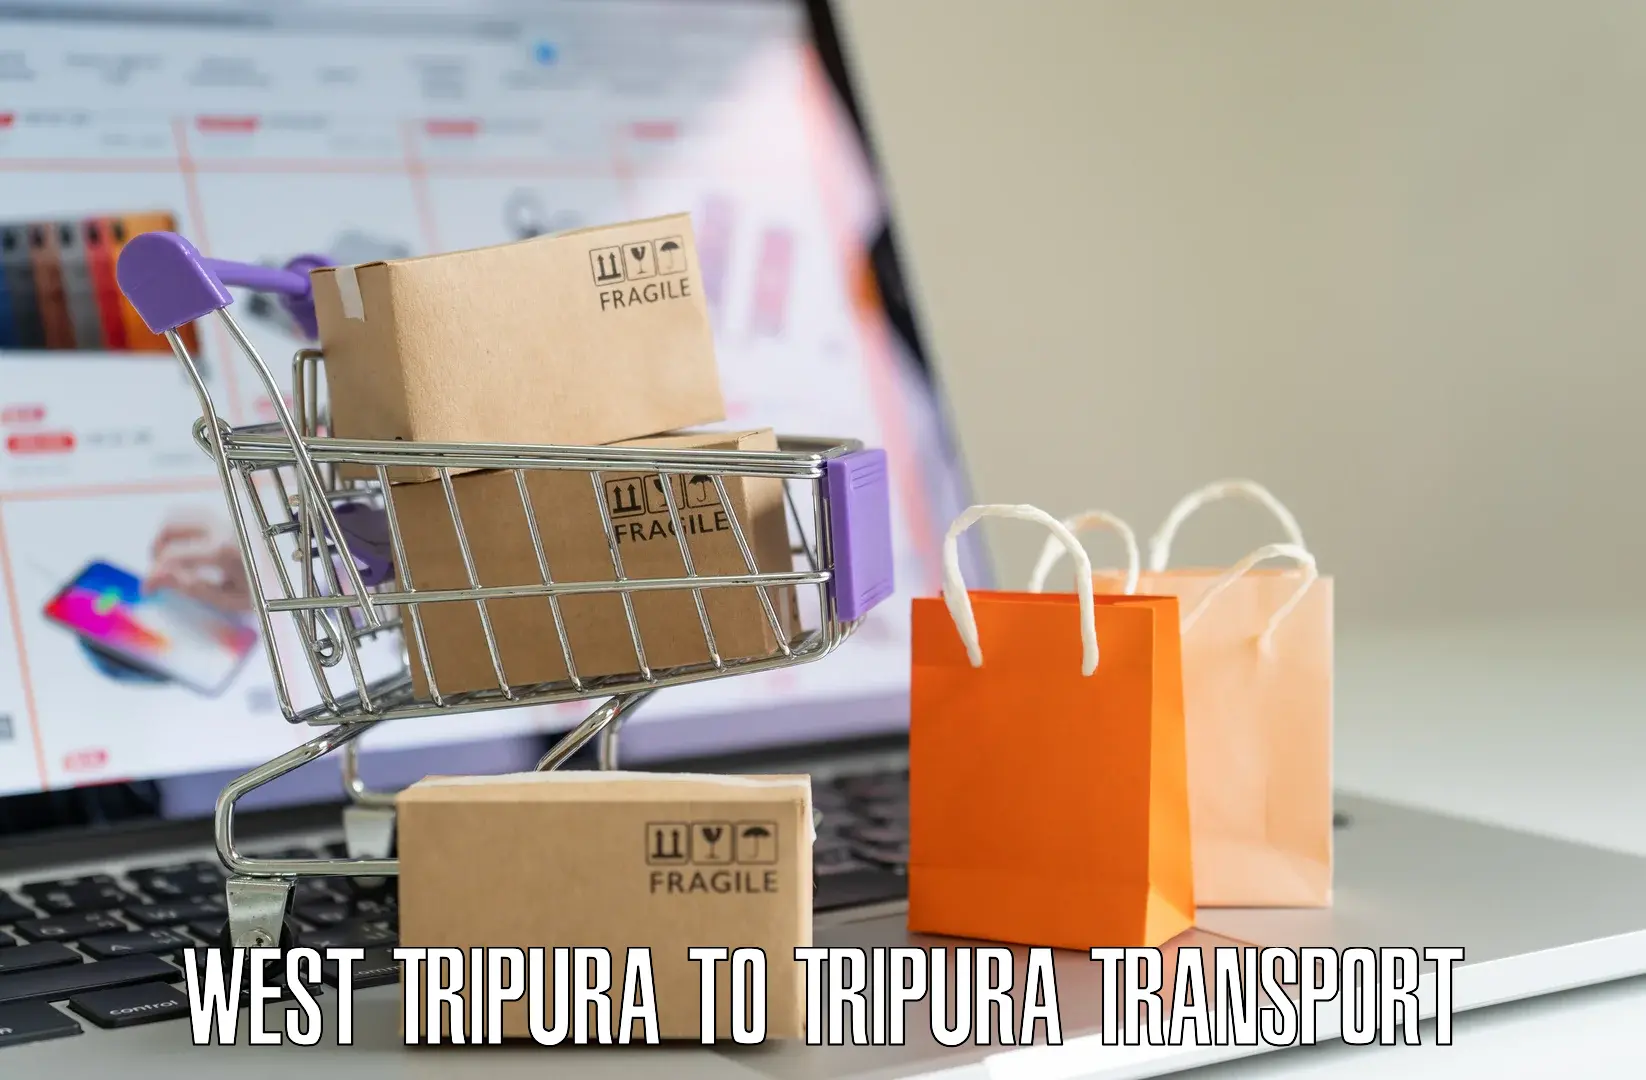 Online transport in West Tripura to North Tripura